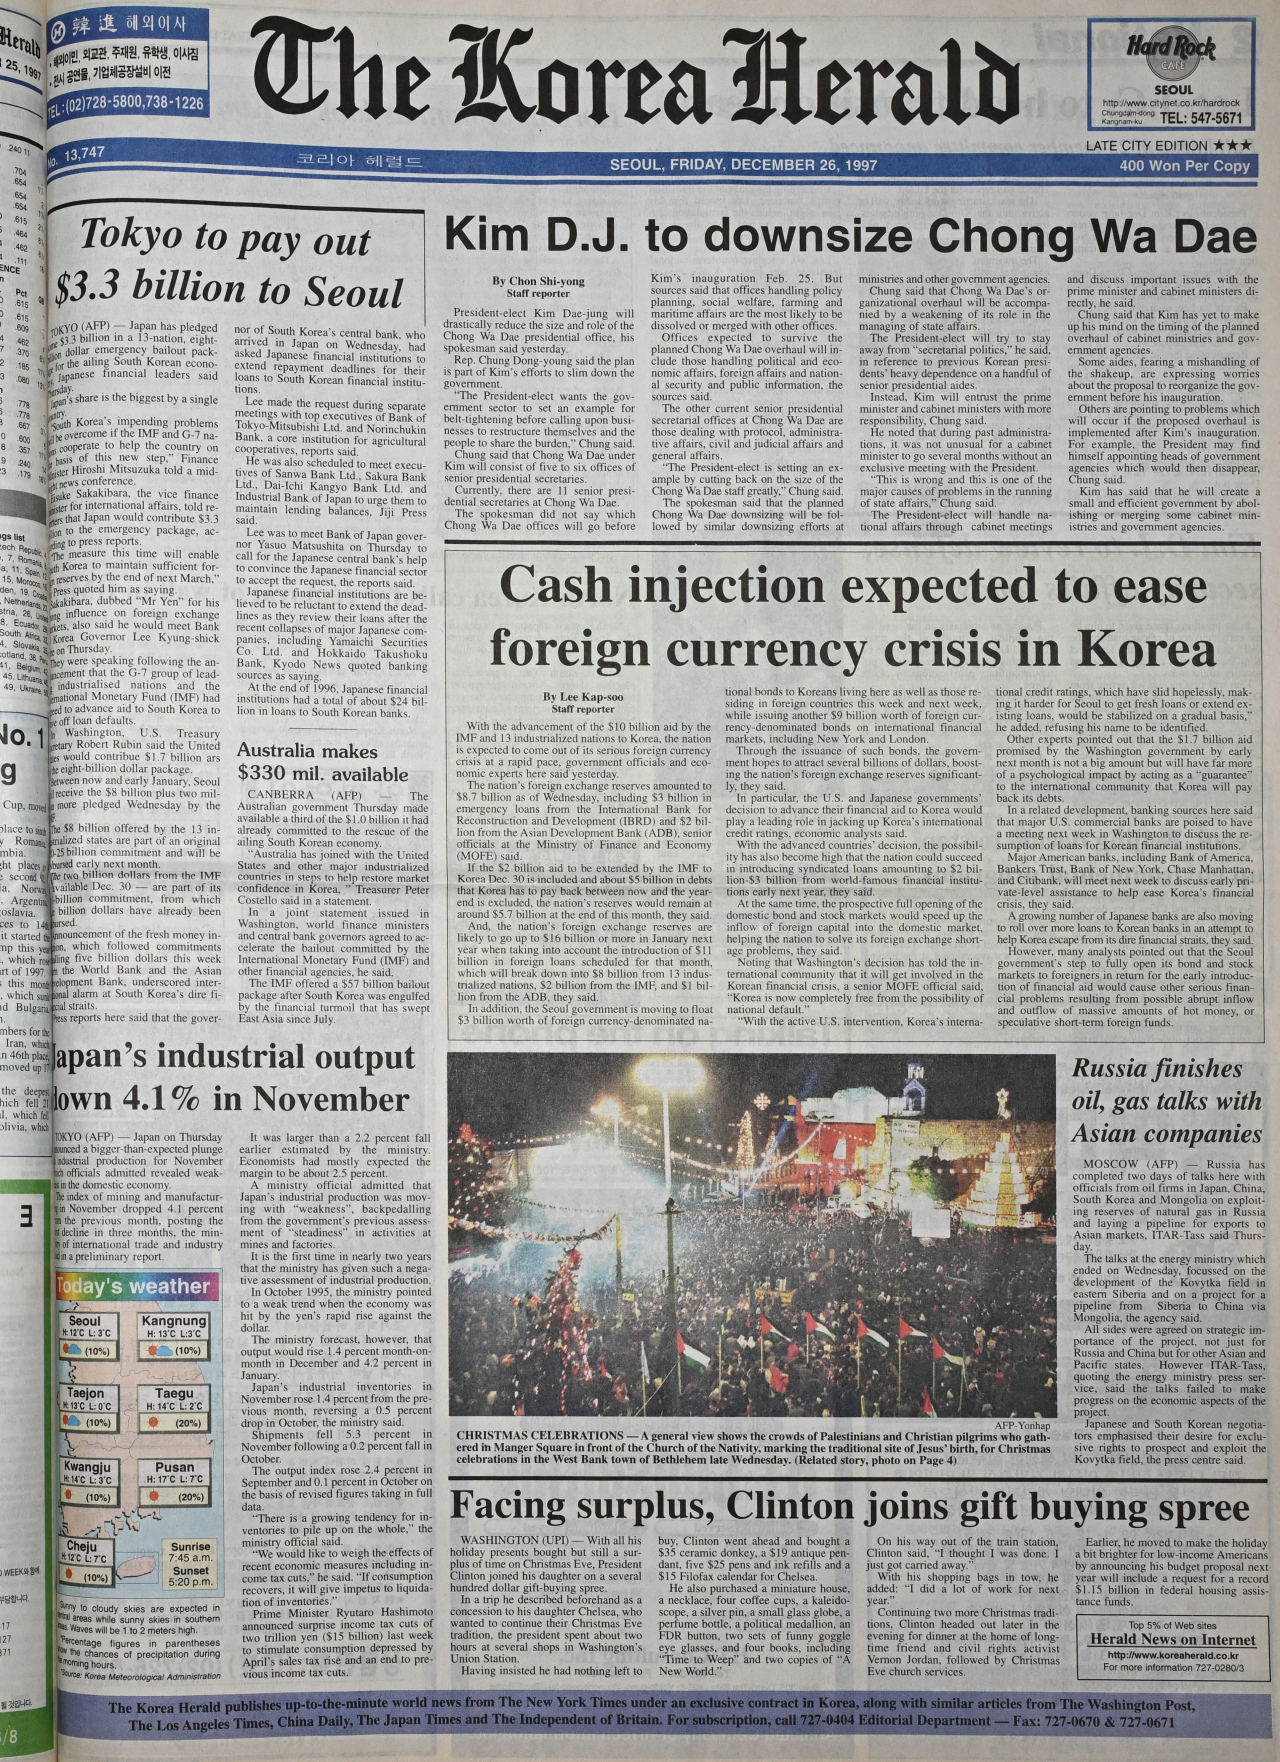 The Dec. 26, 1997 edition of The Korea Herald (The Korea Herald)